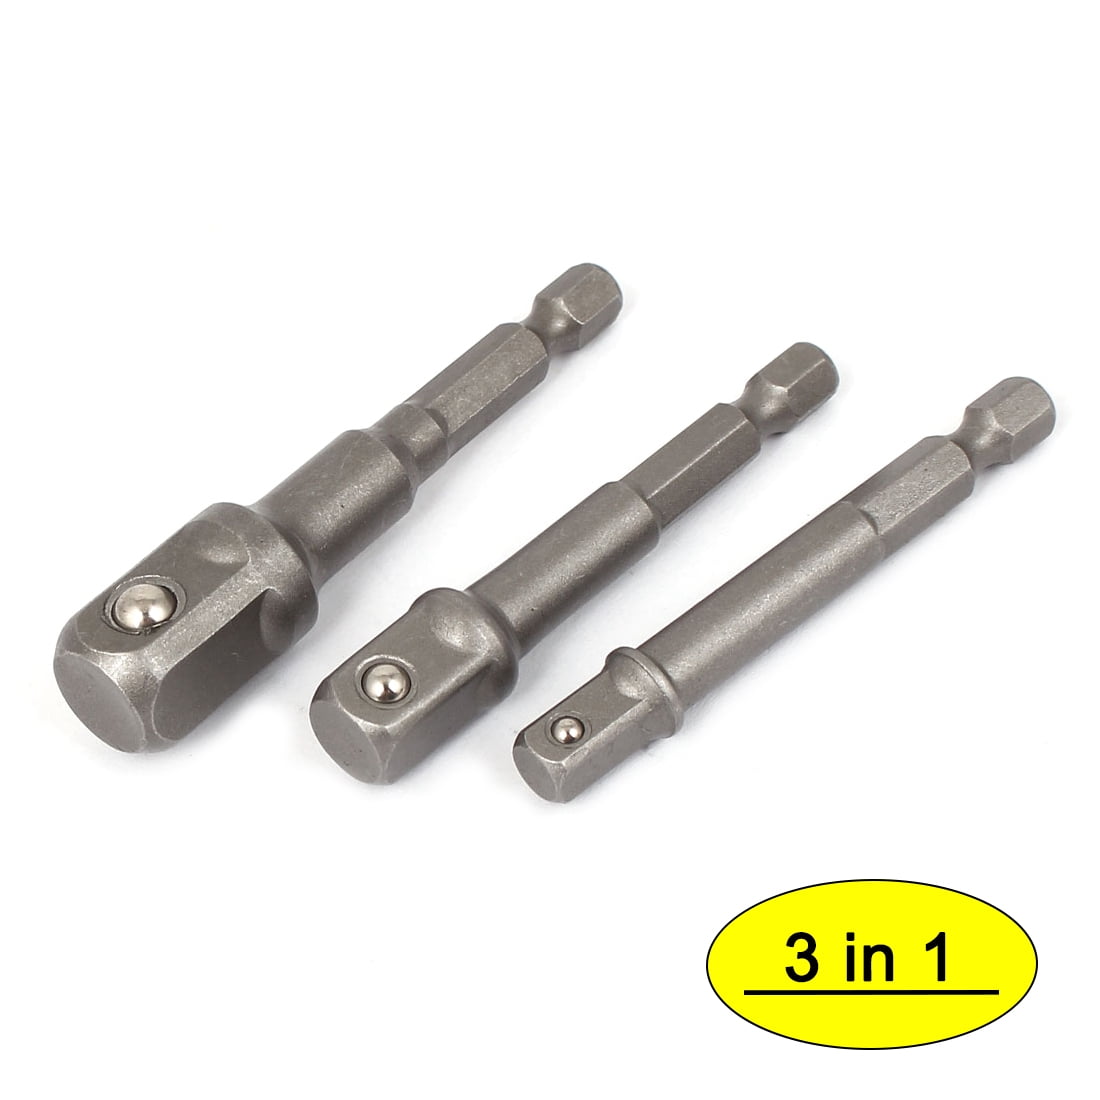 Socket Set,KISENG 3pcs Hex Shank Socket Adapter Set 1/4 3/8 1/2 Inch Driver Extension Drill Bits Bar 